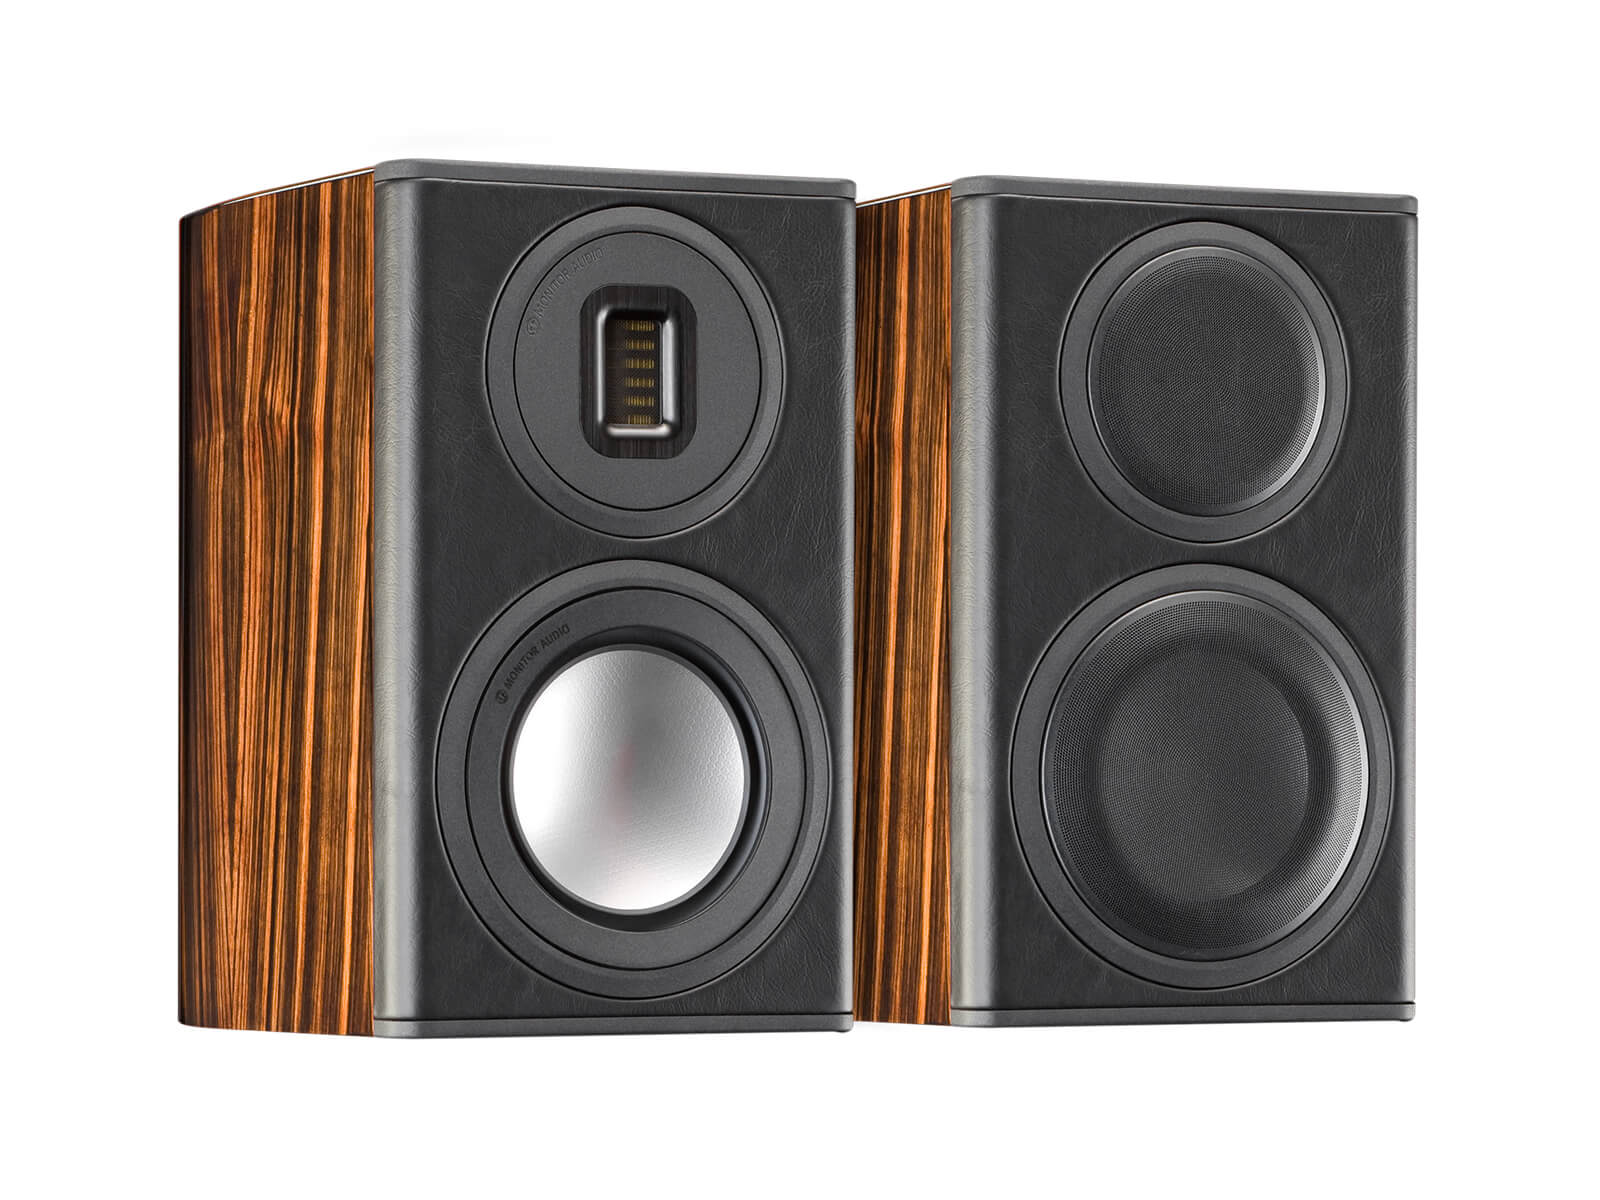 Platinum PL100 II, grille-less bookshelf speakers, with an ebony real wood veneer finish.